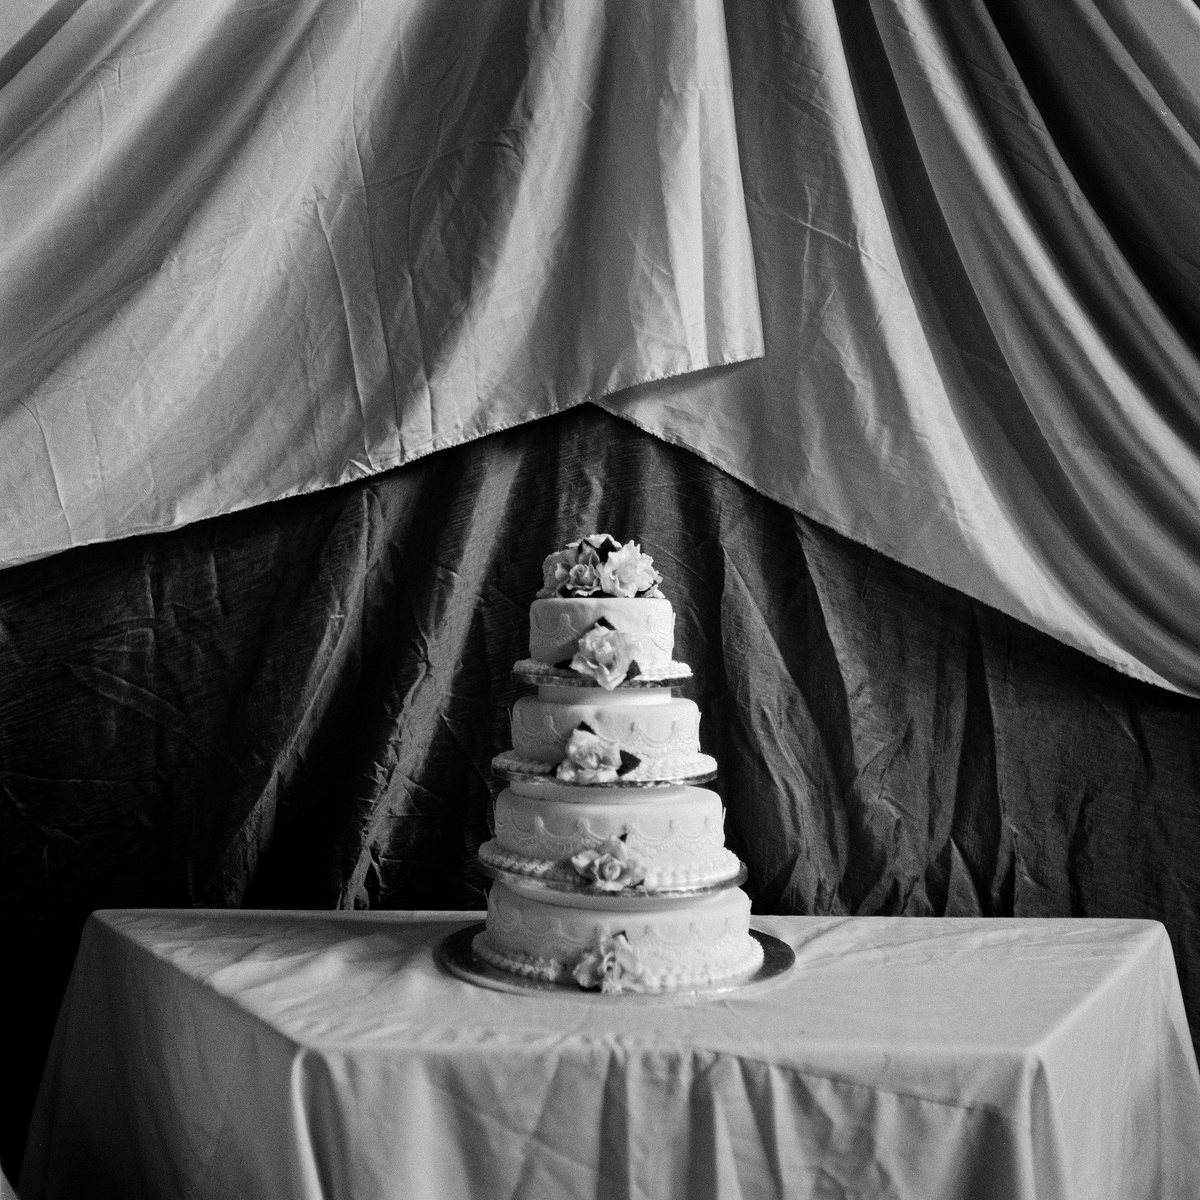 Sabelo Mlangeni’s ‘Ikhekhe Lomshado’, a black and white photograph that depicts a layered wedding cake.
